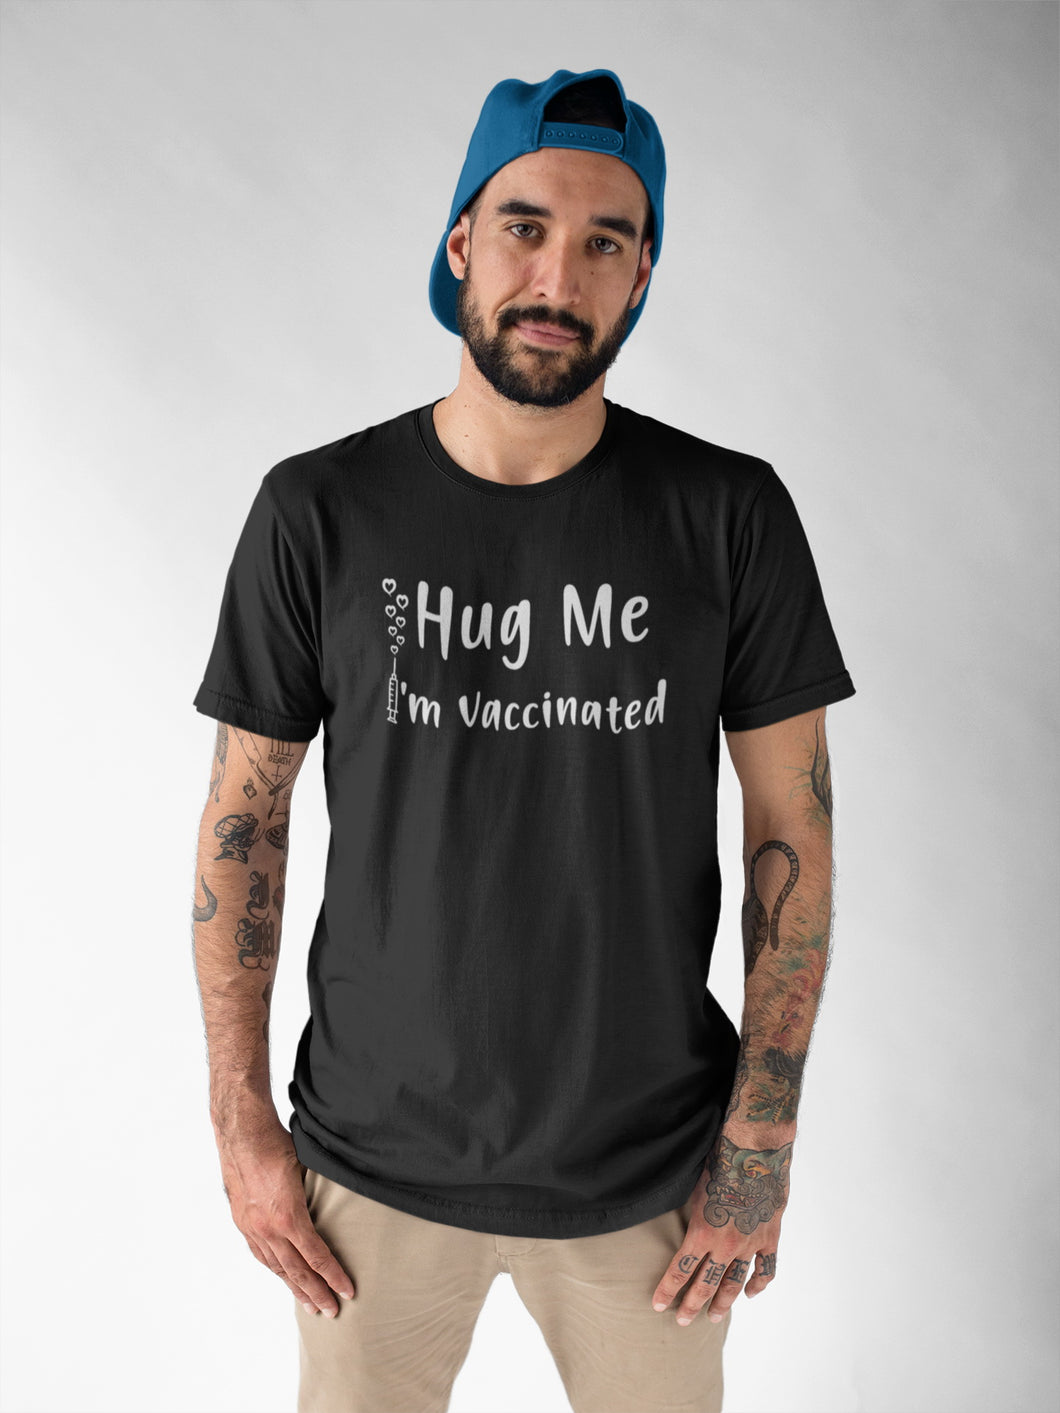 I'm Vaccinated T-shirt